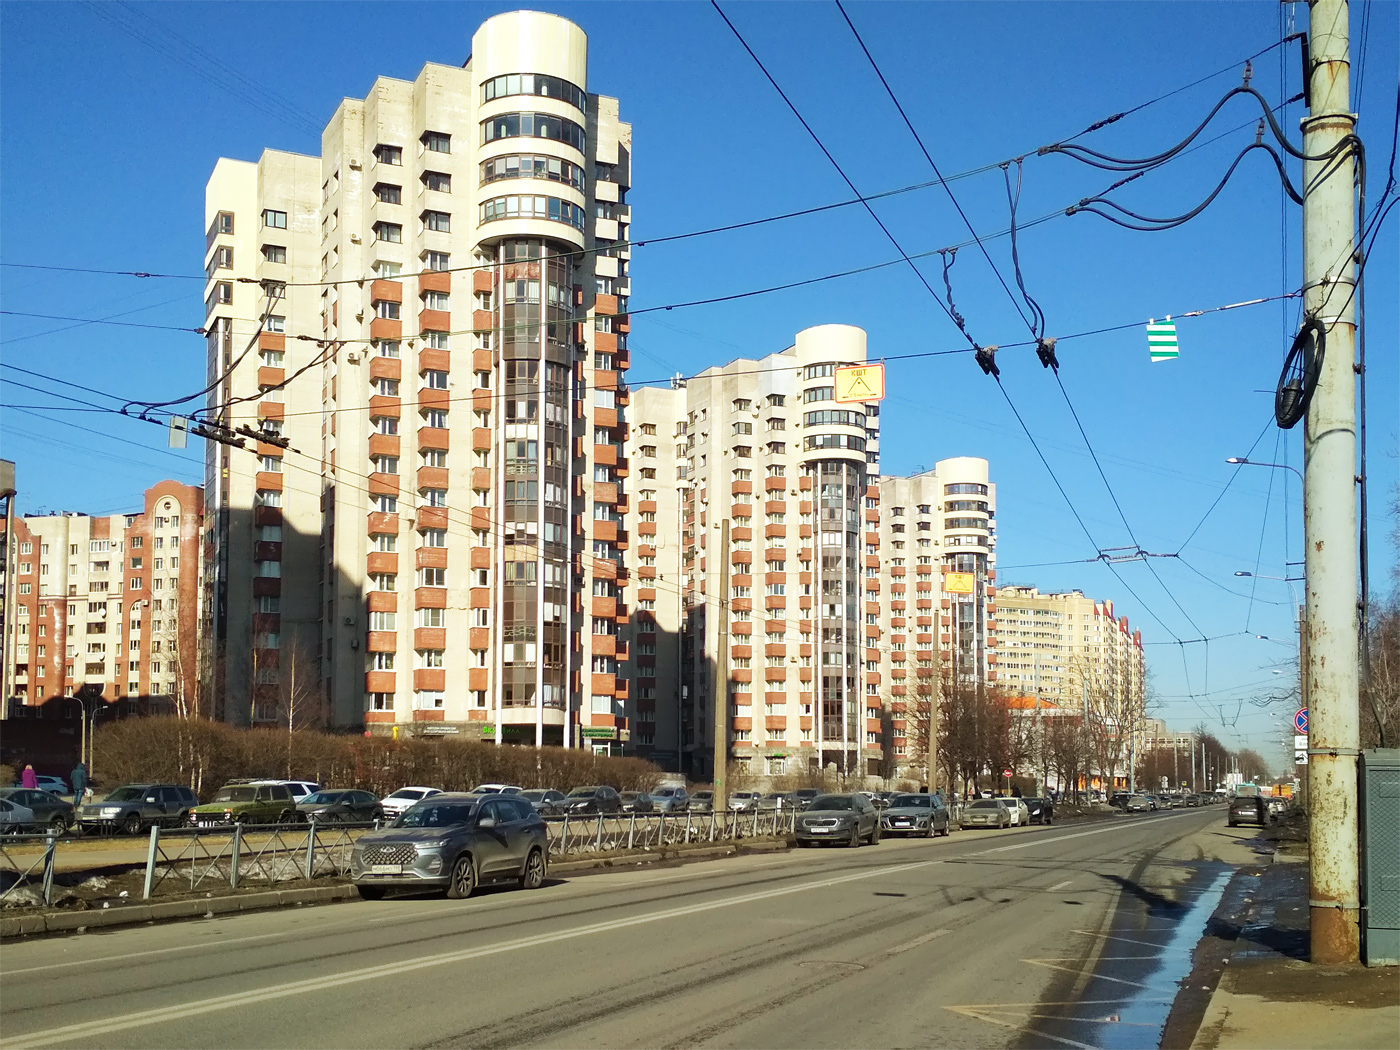 Pietari — Trolleybus lines and infrastructure